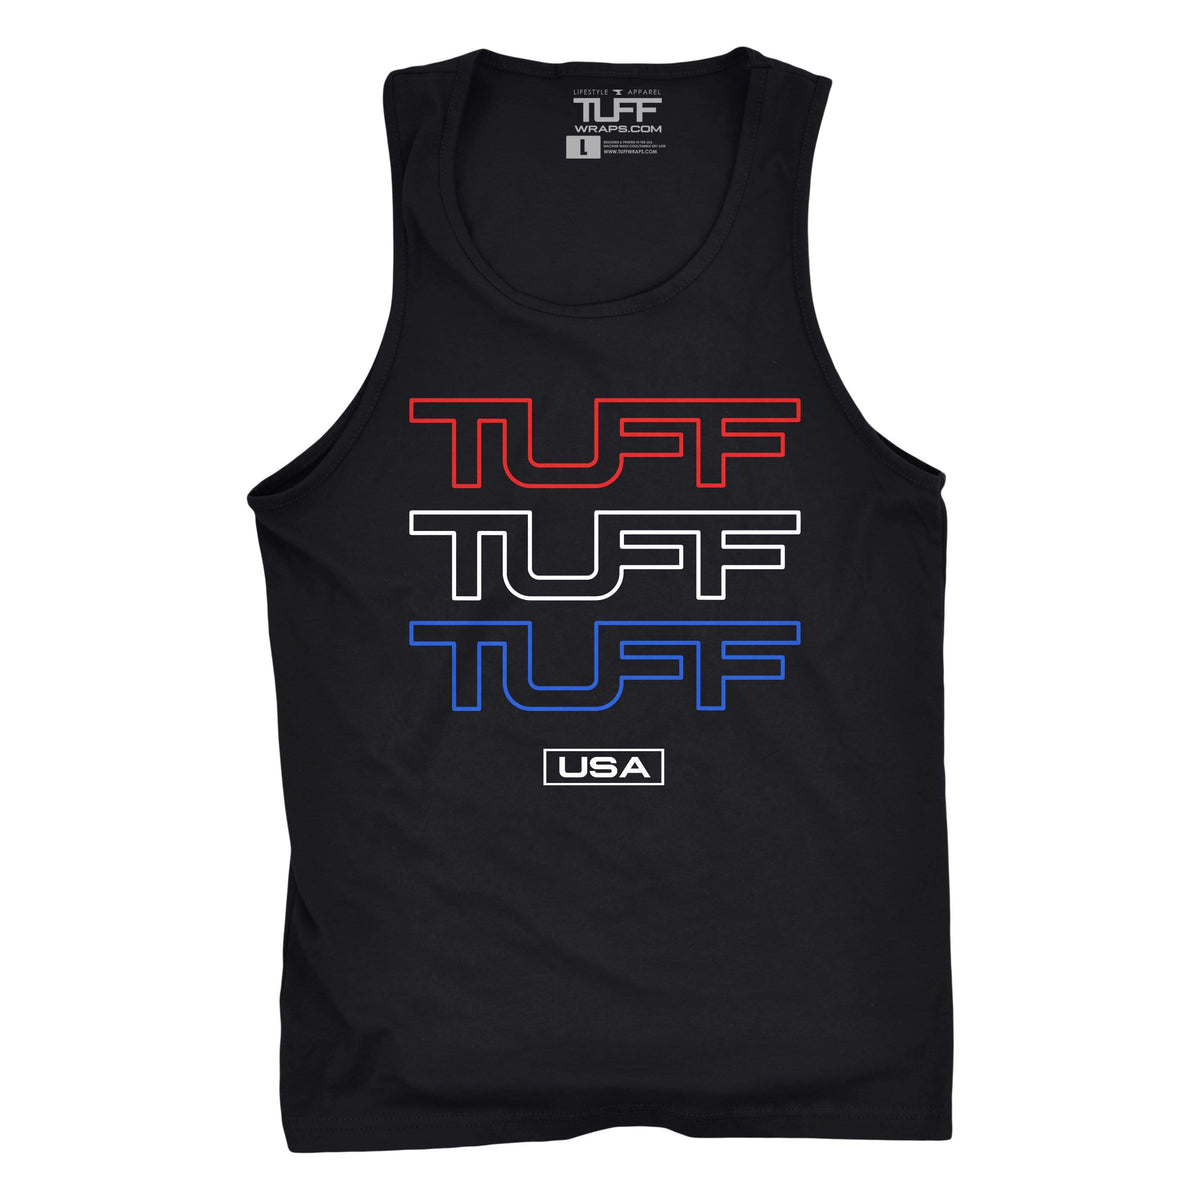 Triple TUFF USA Tank S / Black TuffWraps.com